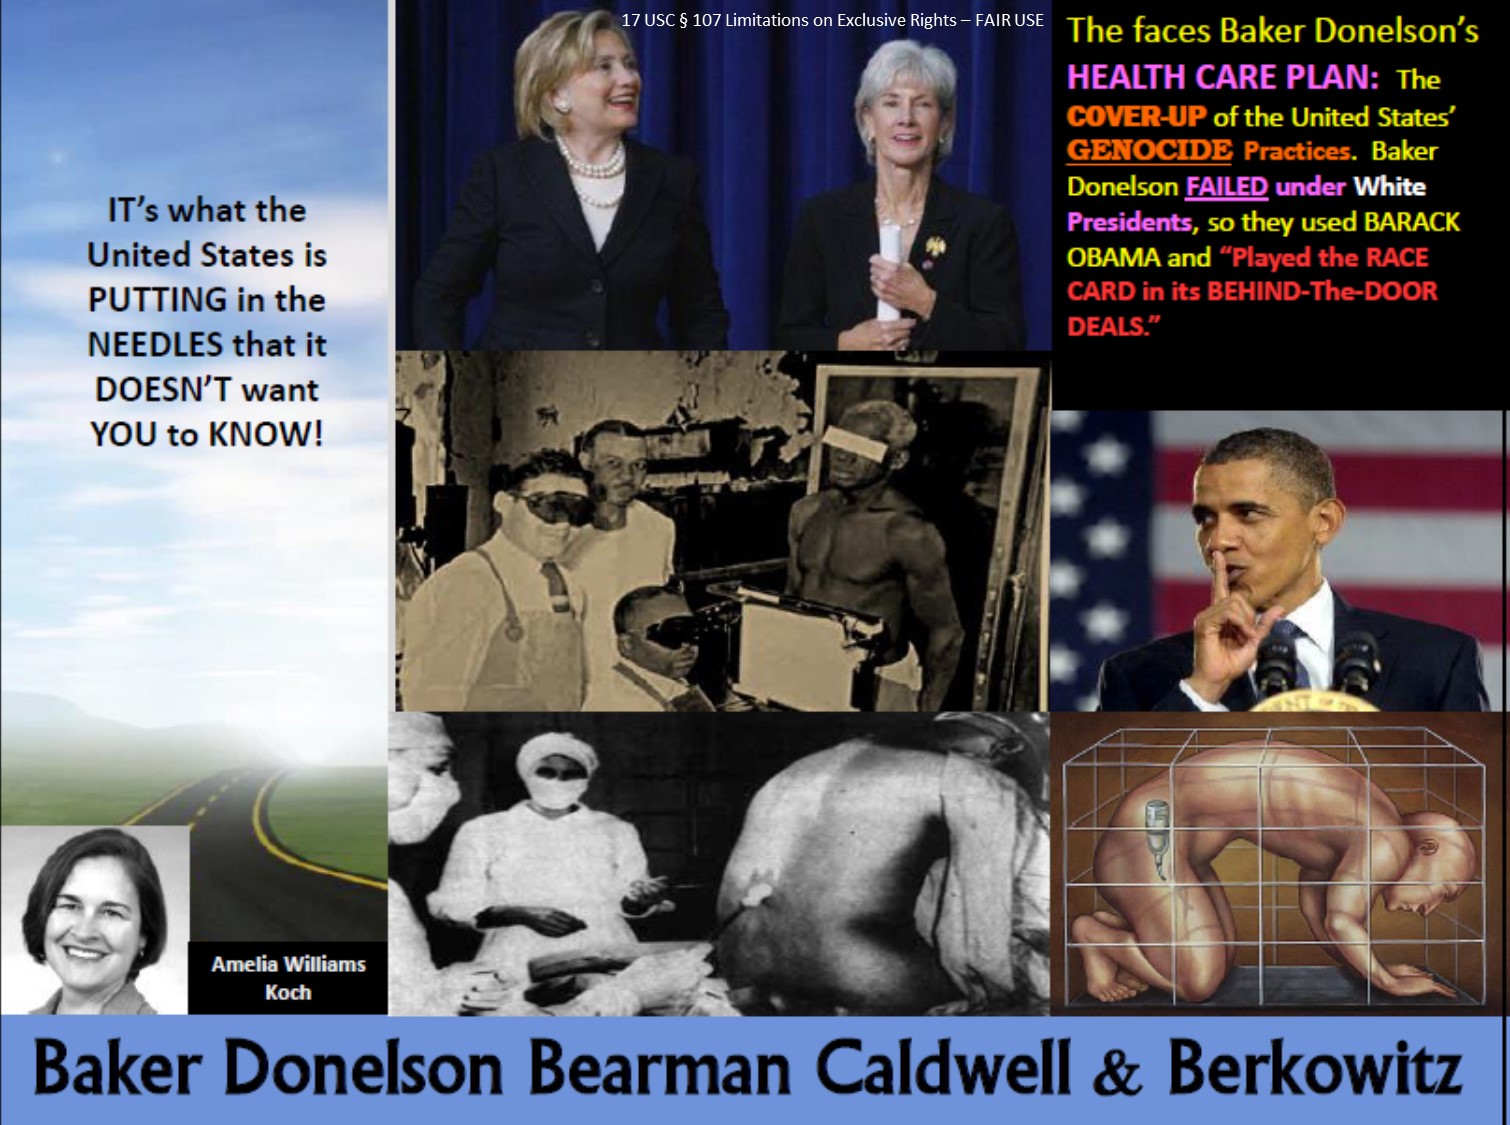 BAKER DONELSON USA HEALTH CARE PLAN2